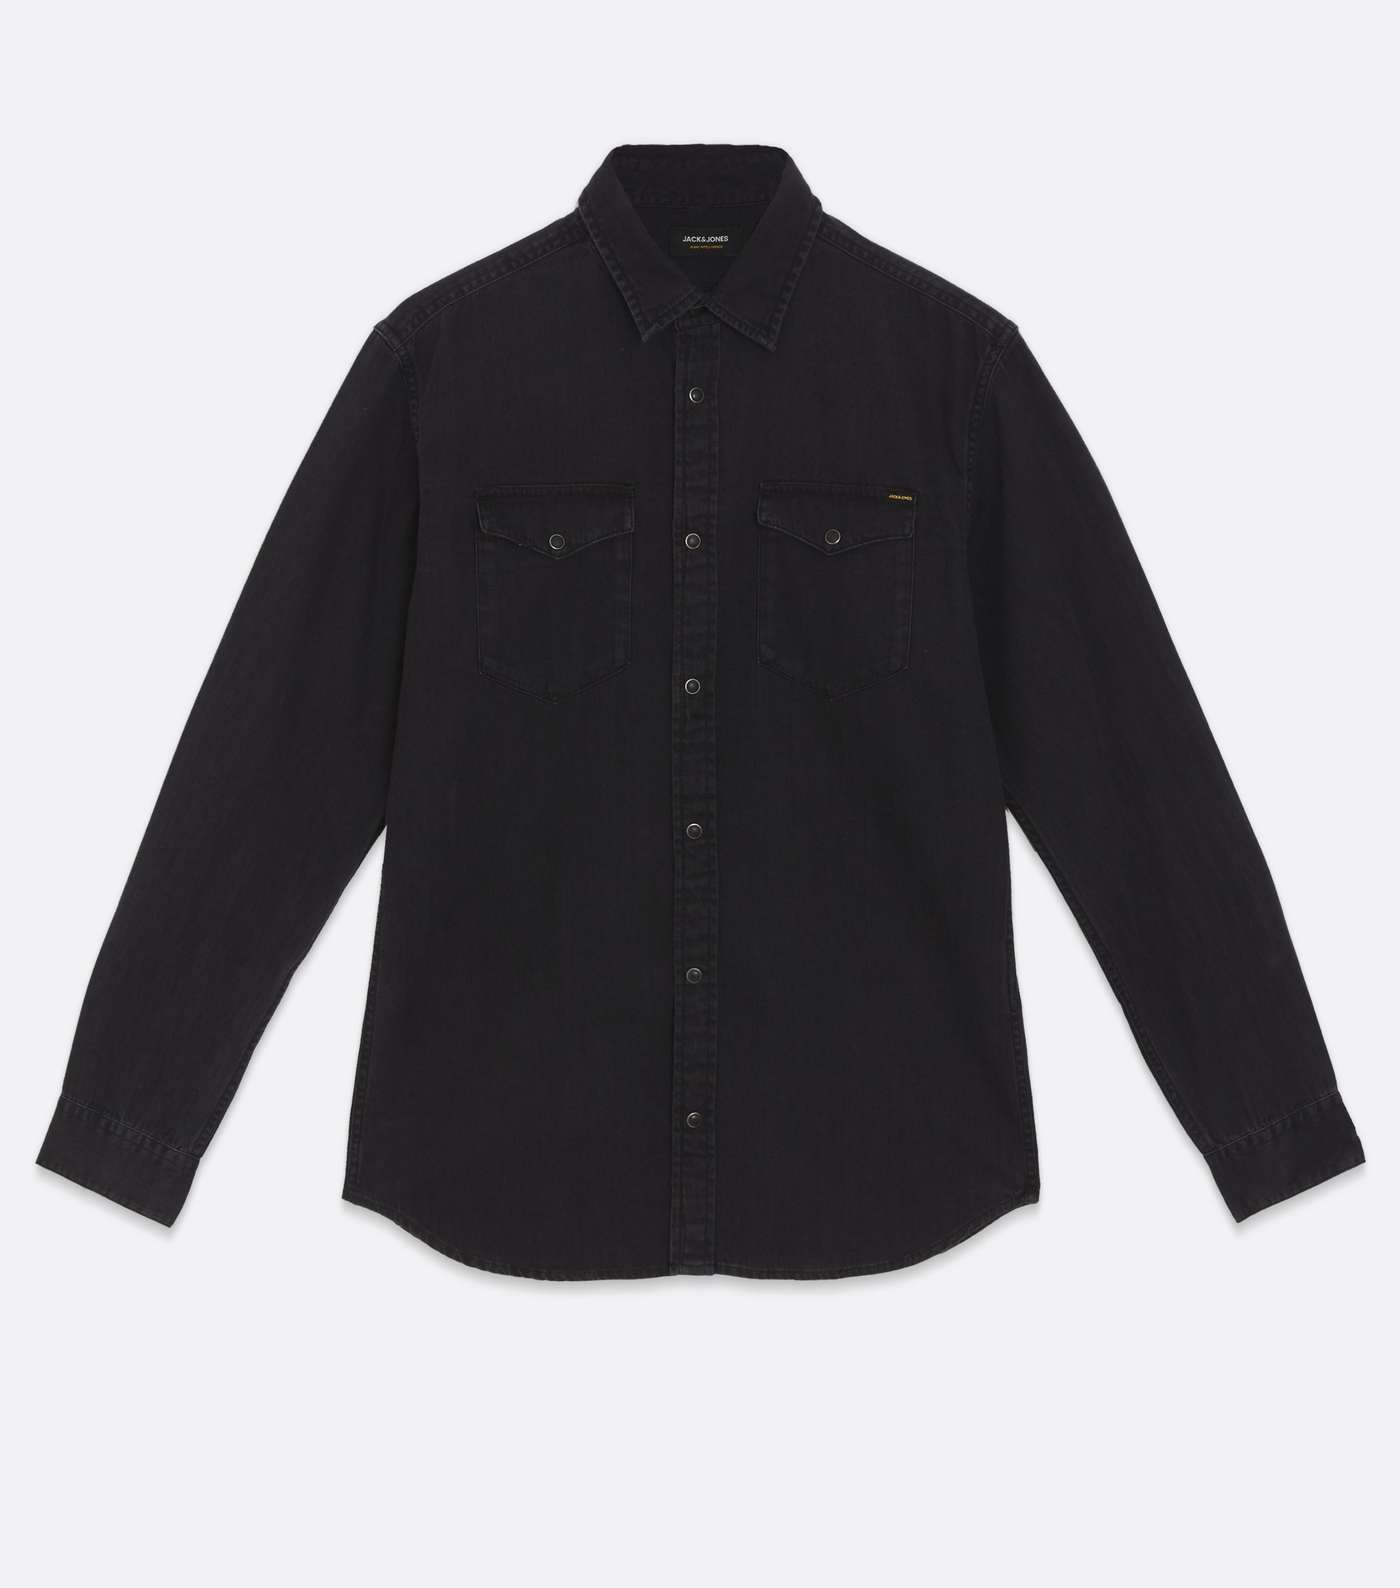 Jack & Jones Black Denim Long Sleeve Shirt Image 5